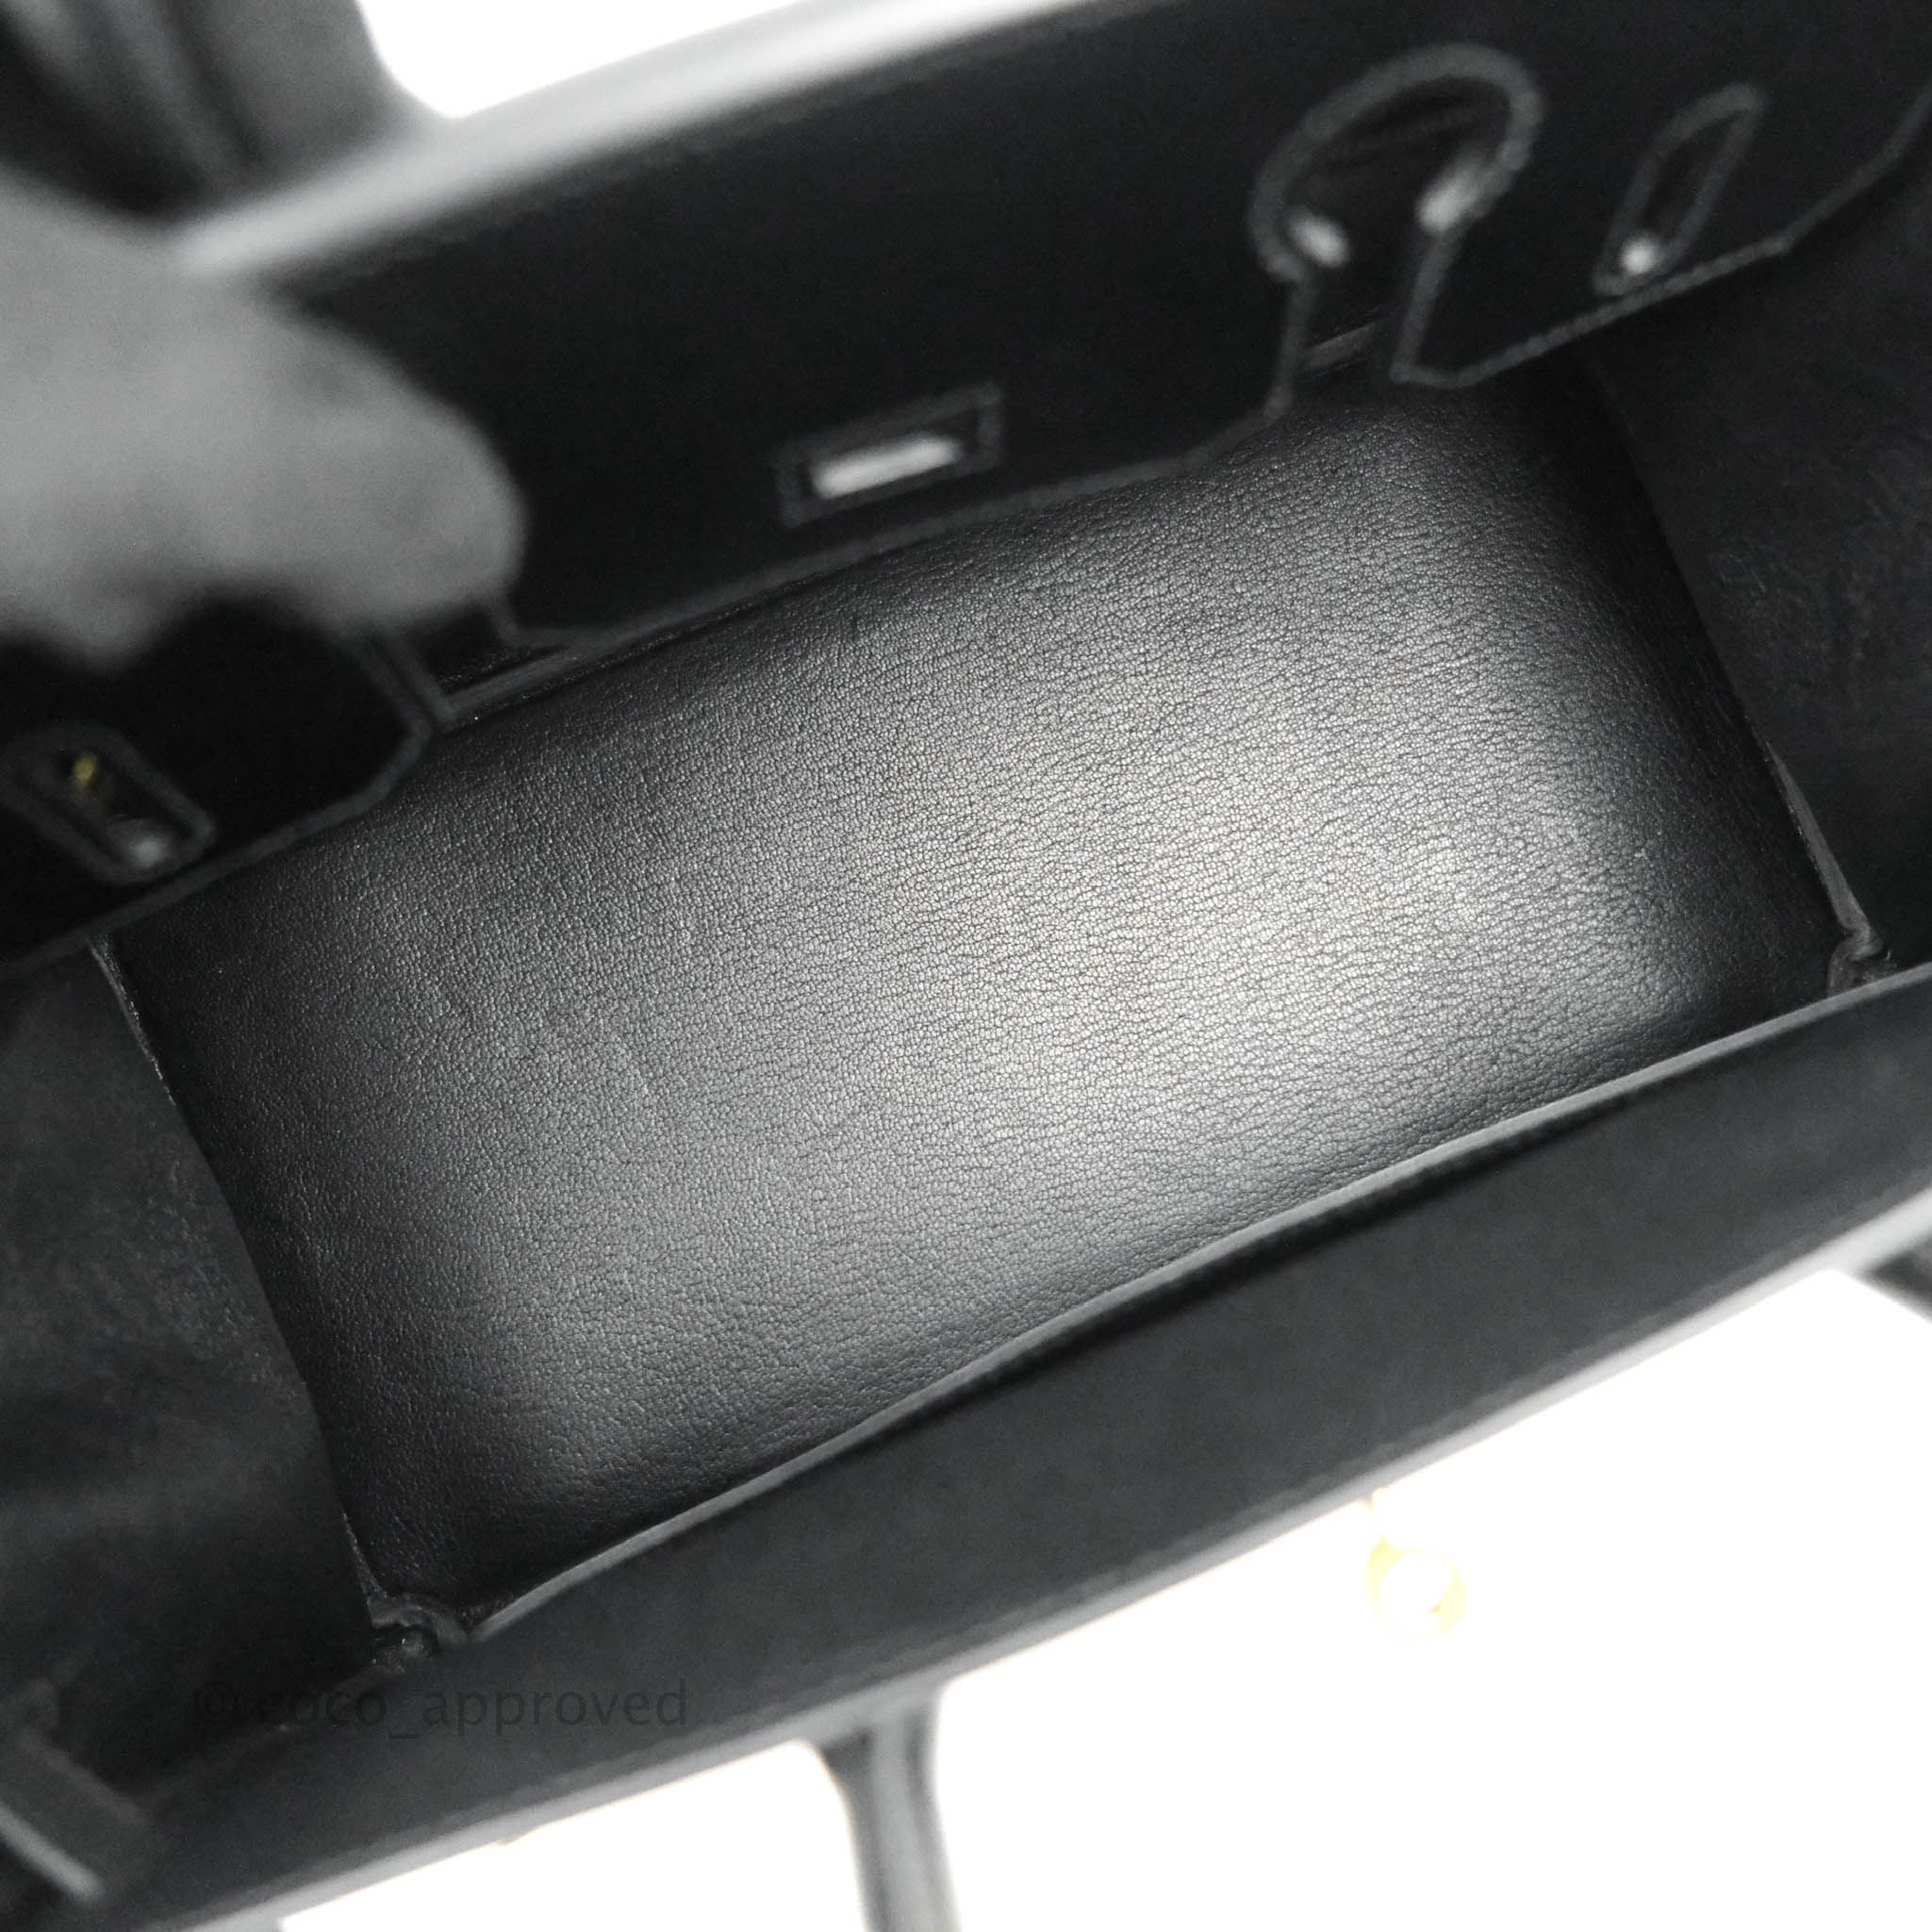 Hermes SO Black Box Birkin 30cm Black Hardware – Madison Avenue Couture